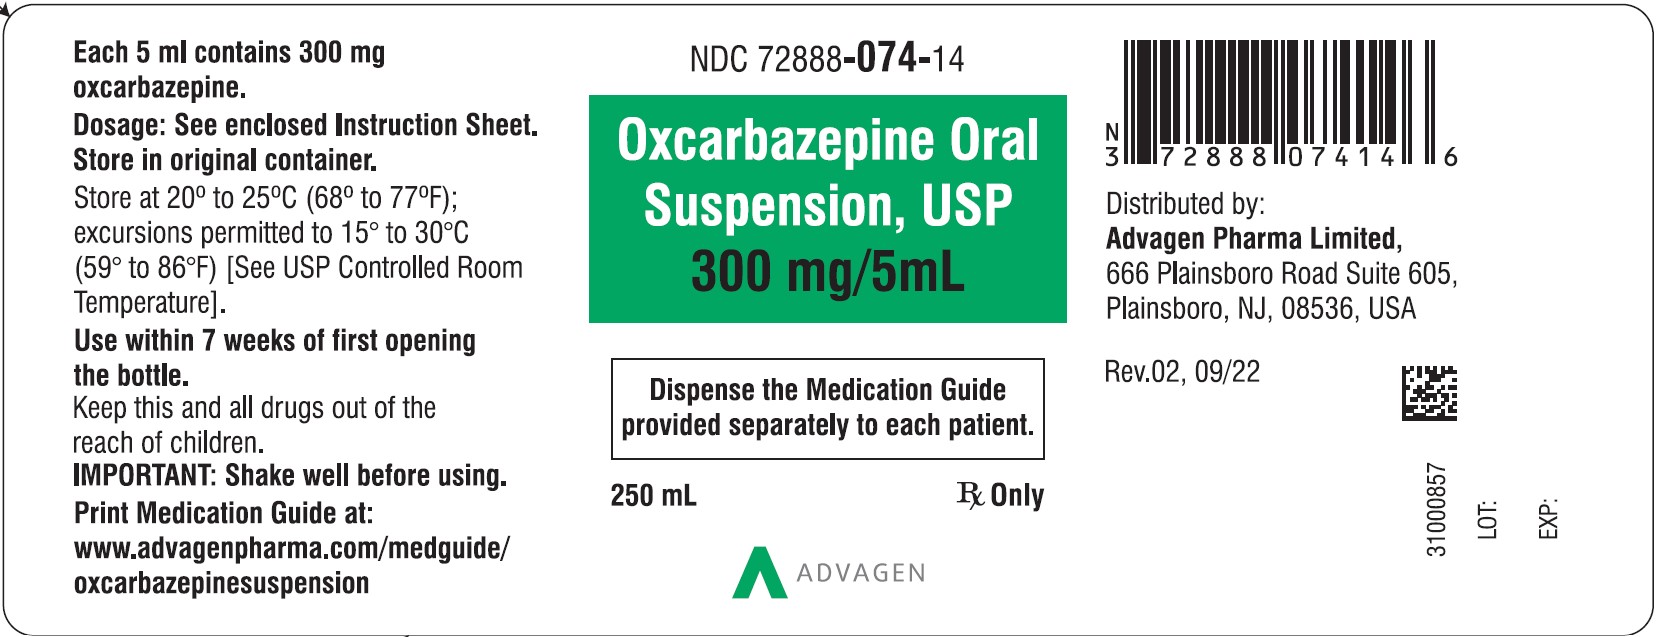 Oxcarbazepine 300 mg/5 mL Oral Suspension - NDC 72888-074-14 - Carton Label